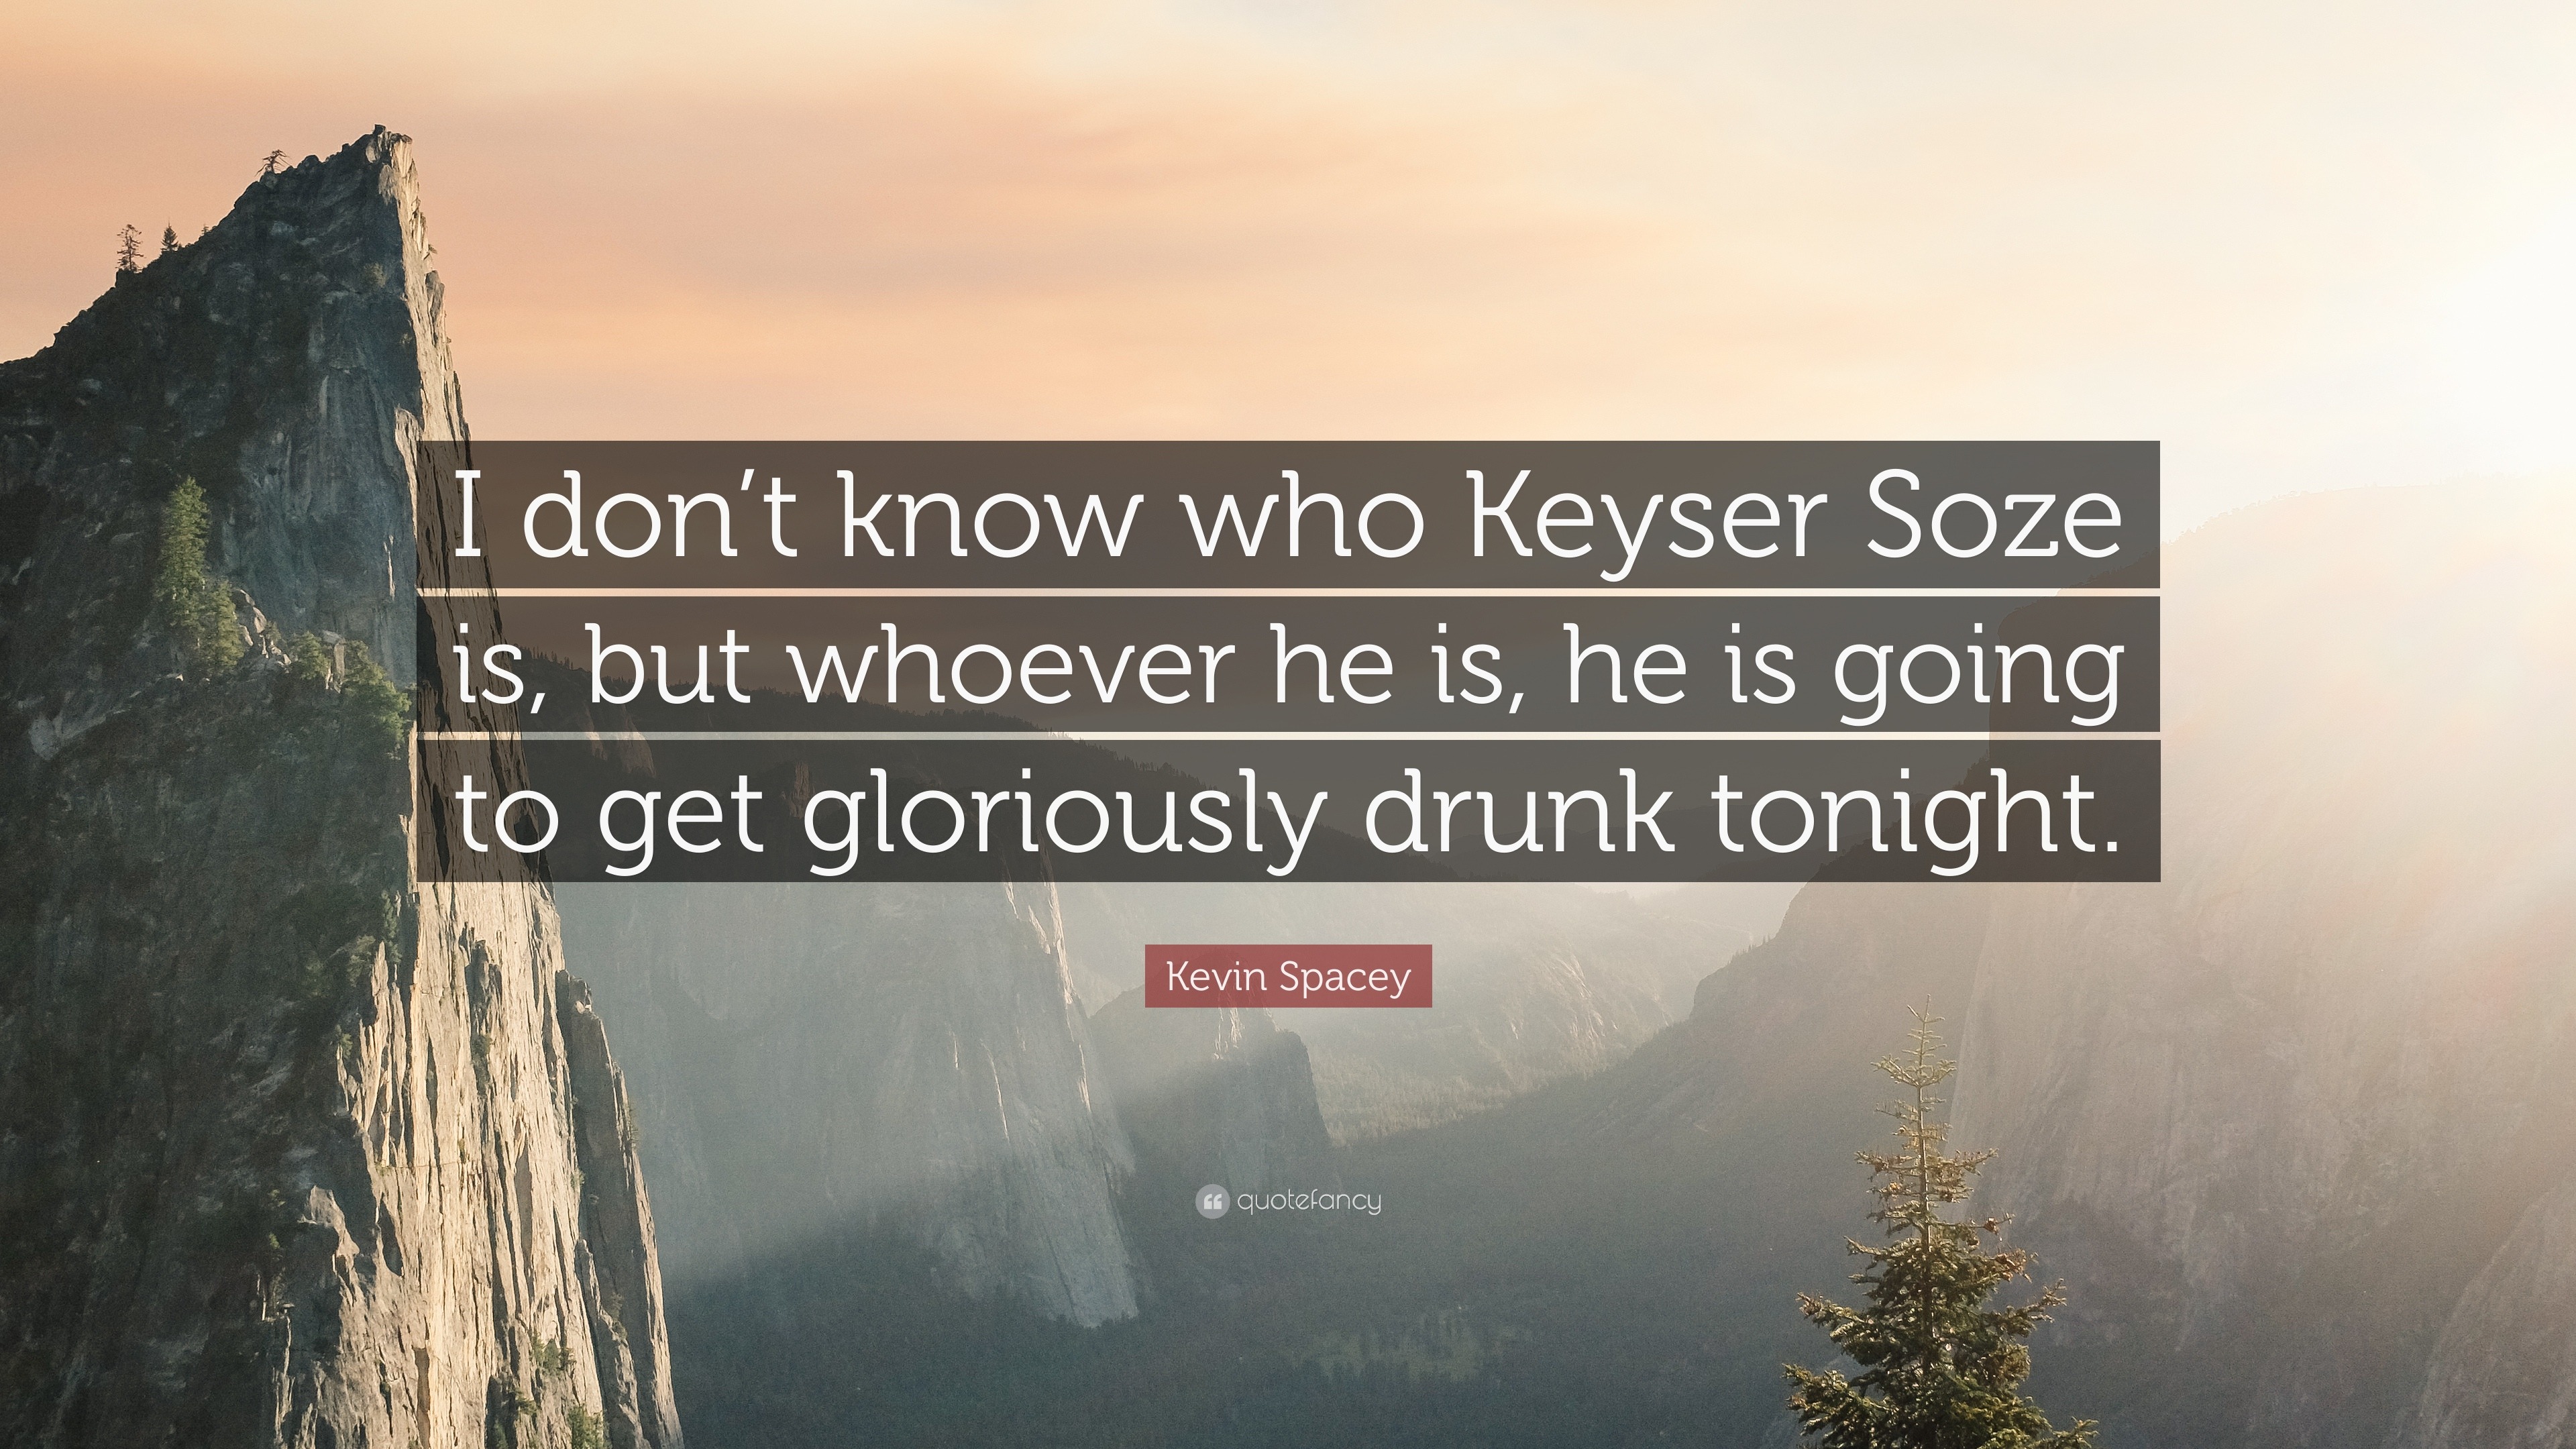 YARN, Did you know Keyser Soze was Kevin Spacey?